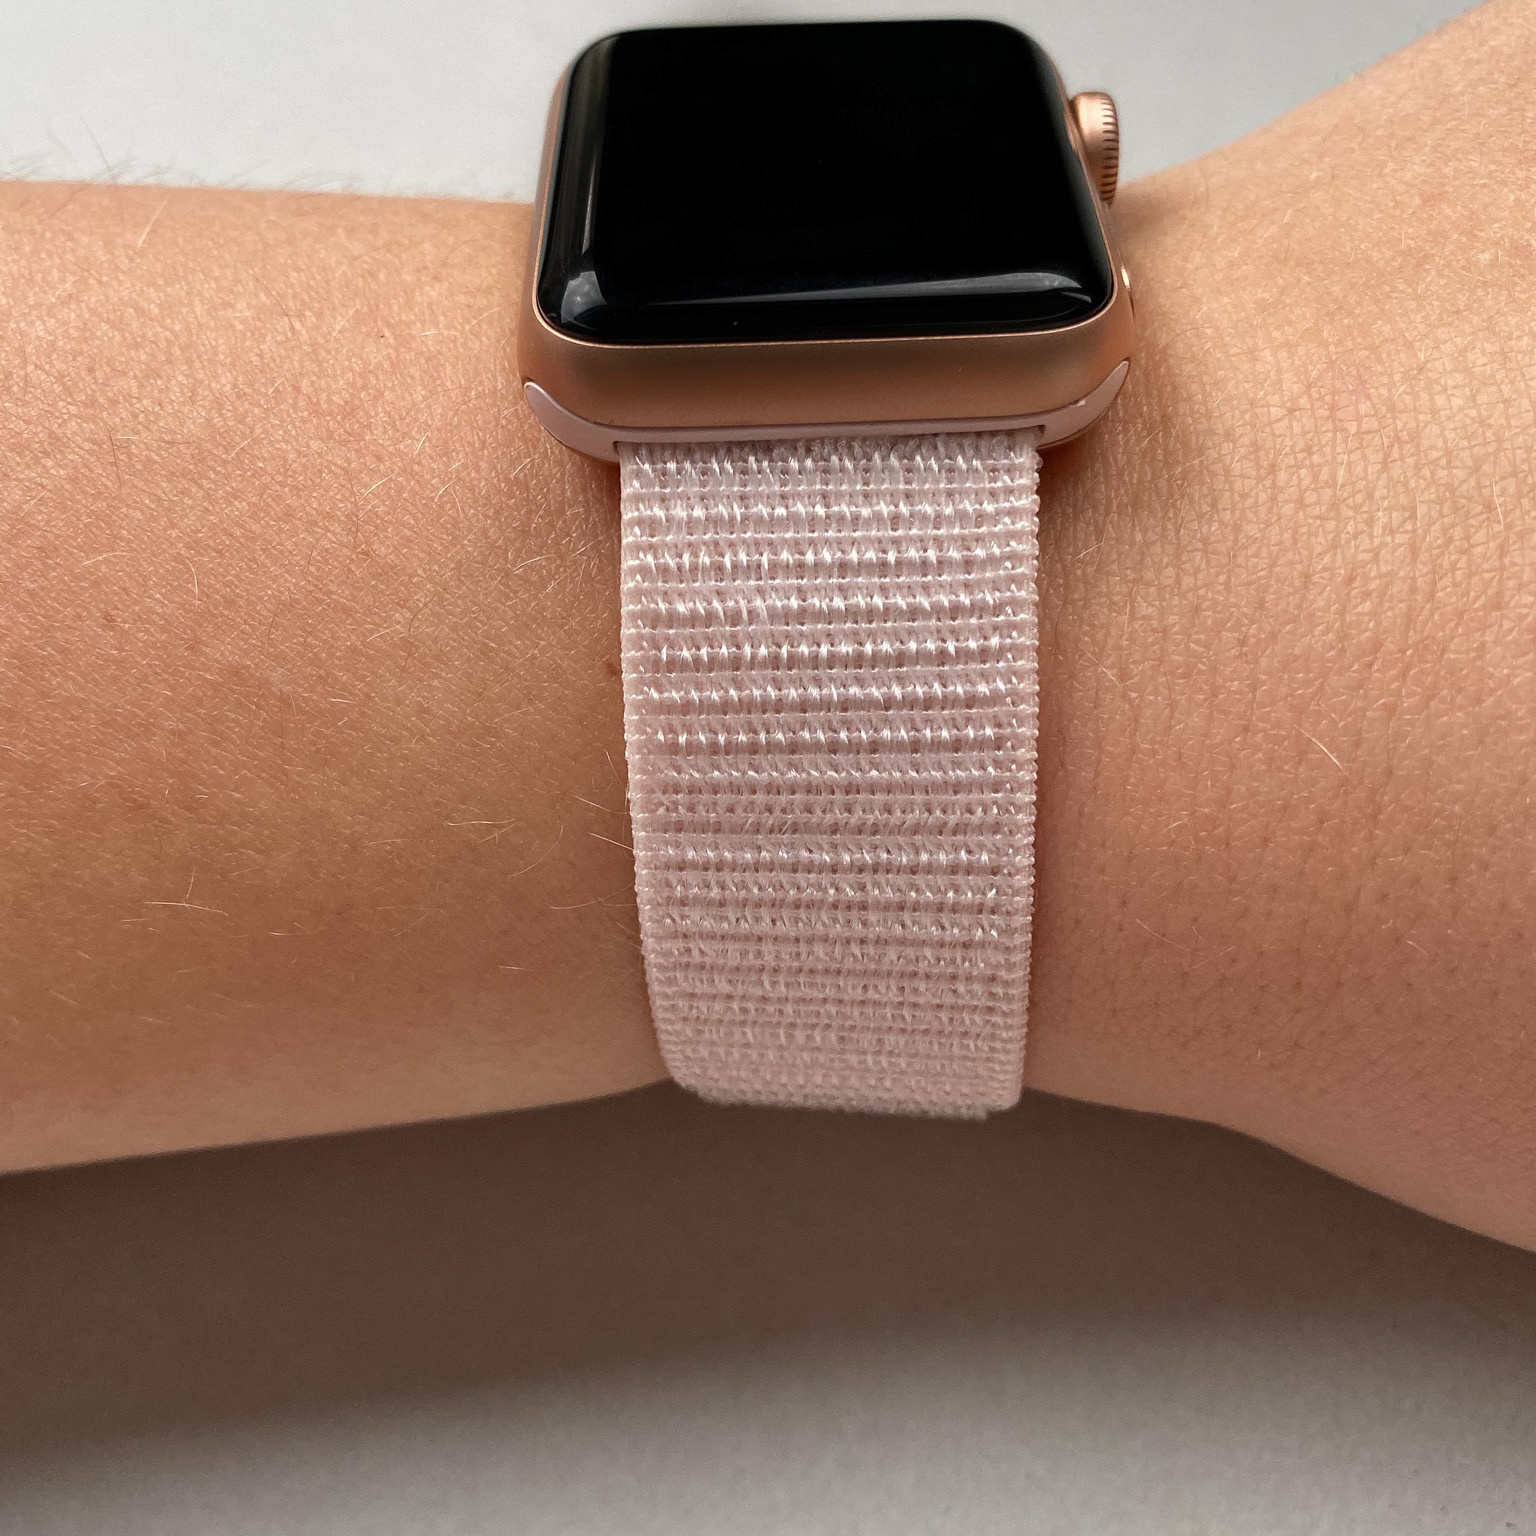 Apple Watch nylon geweven sport band  - roze